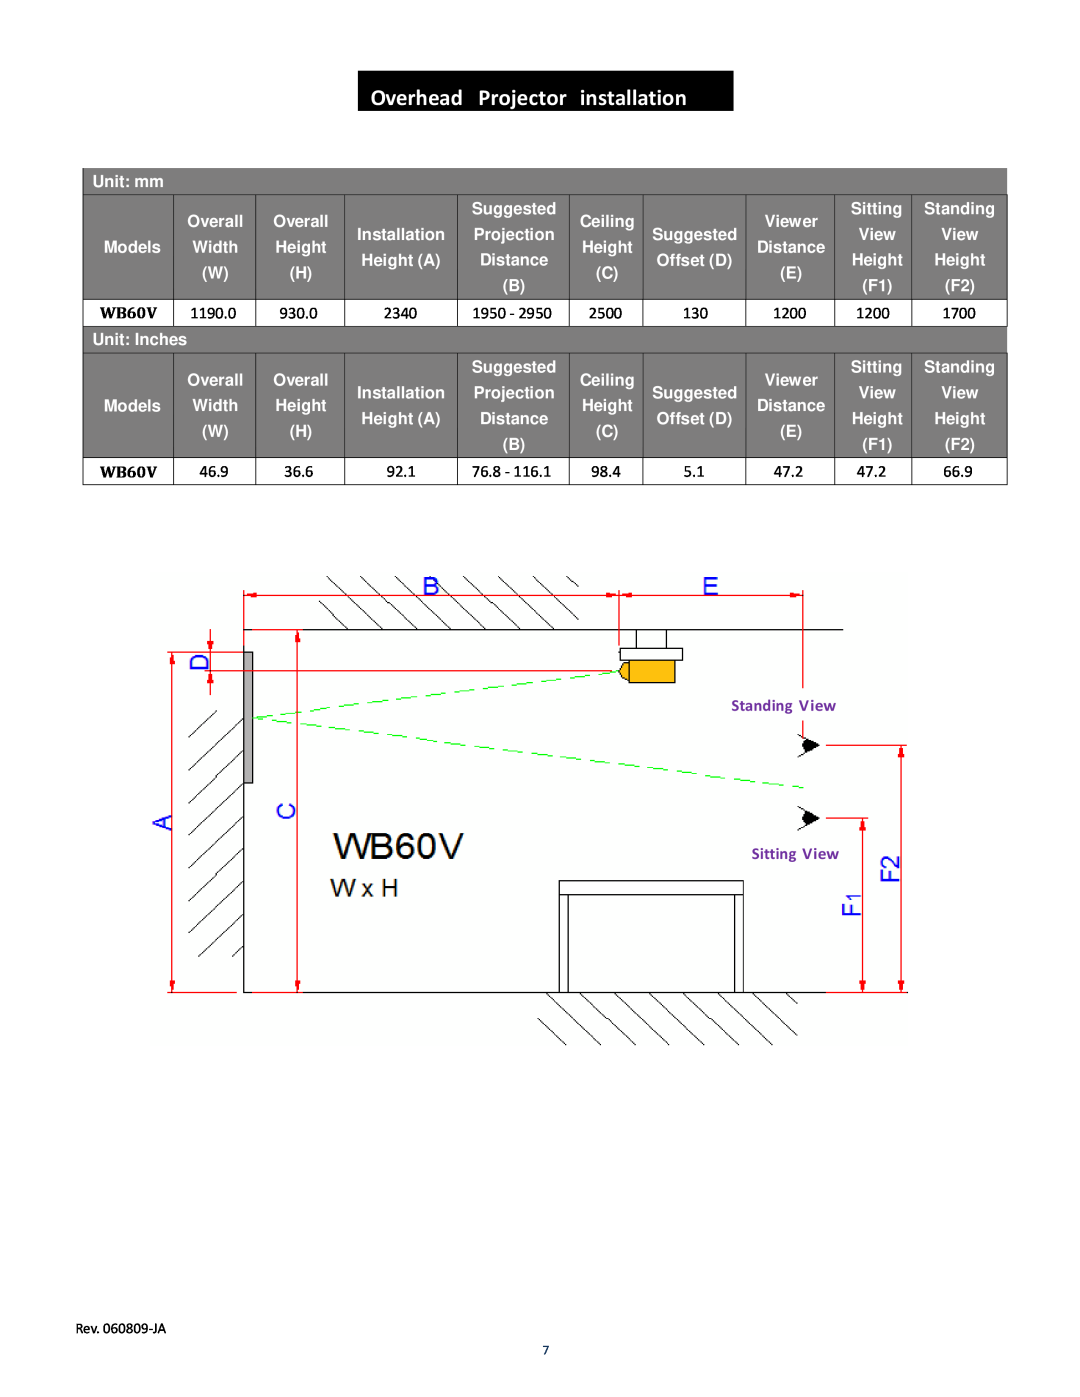 Elite Screens WhiteBoardScreen manual Overhead, Projector, installation, WB60V, 930.0, 1200, 1700, 36.6, 47.2, 66.9 